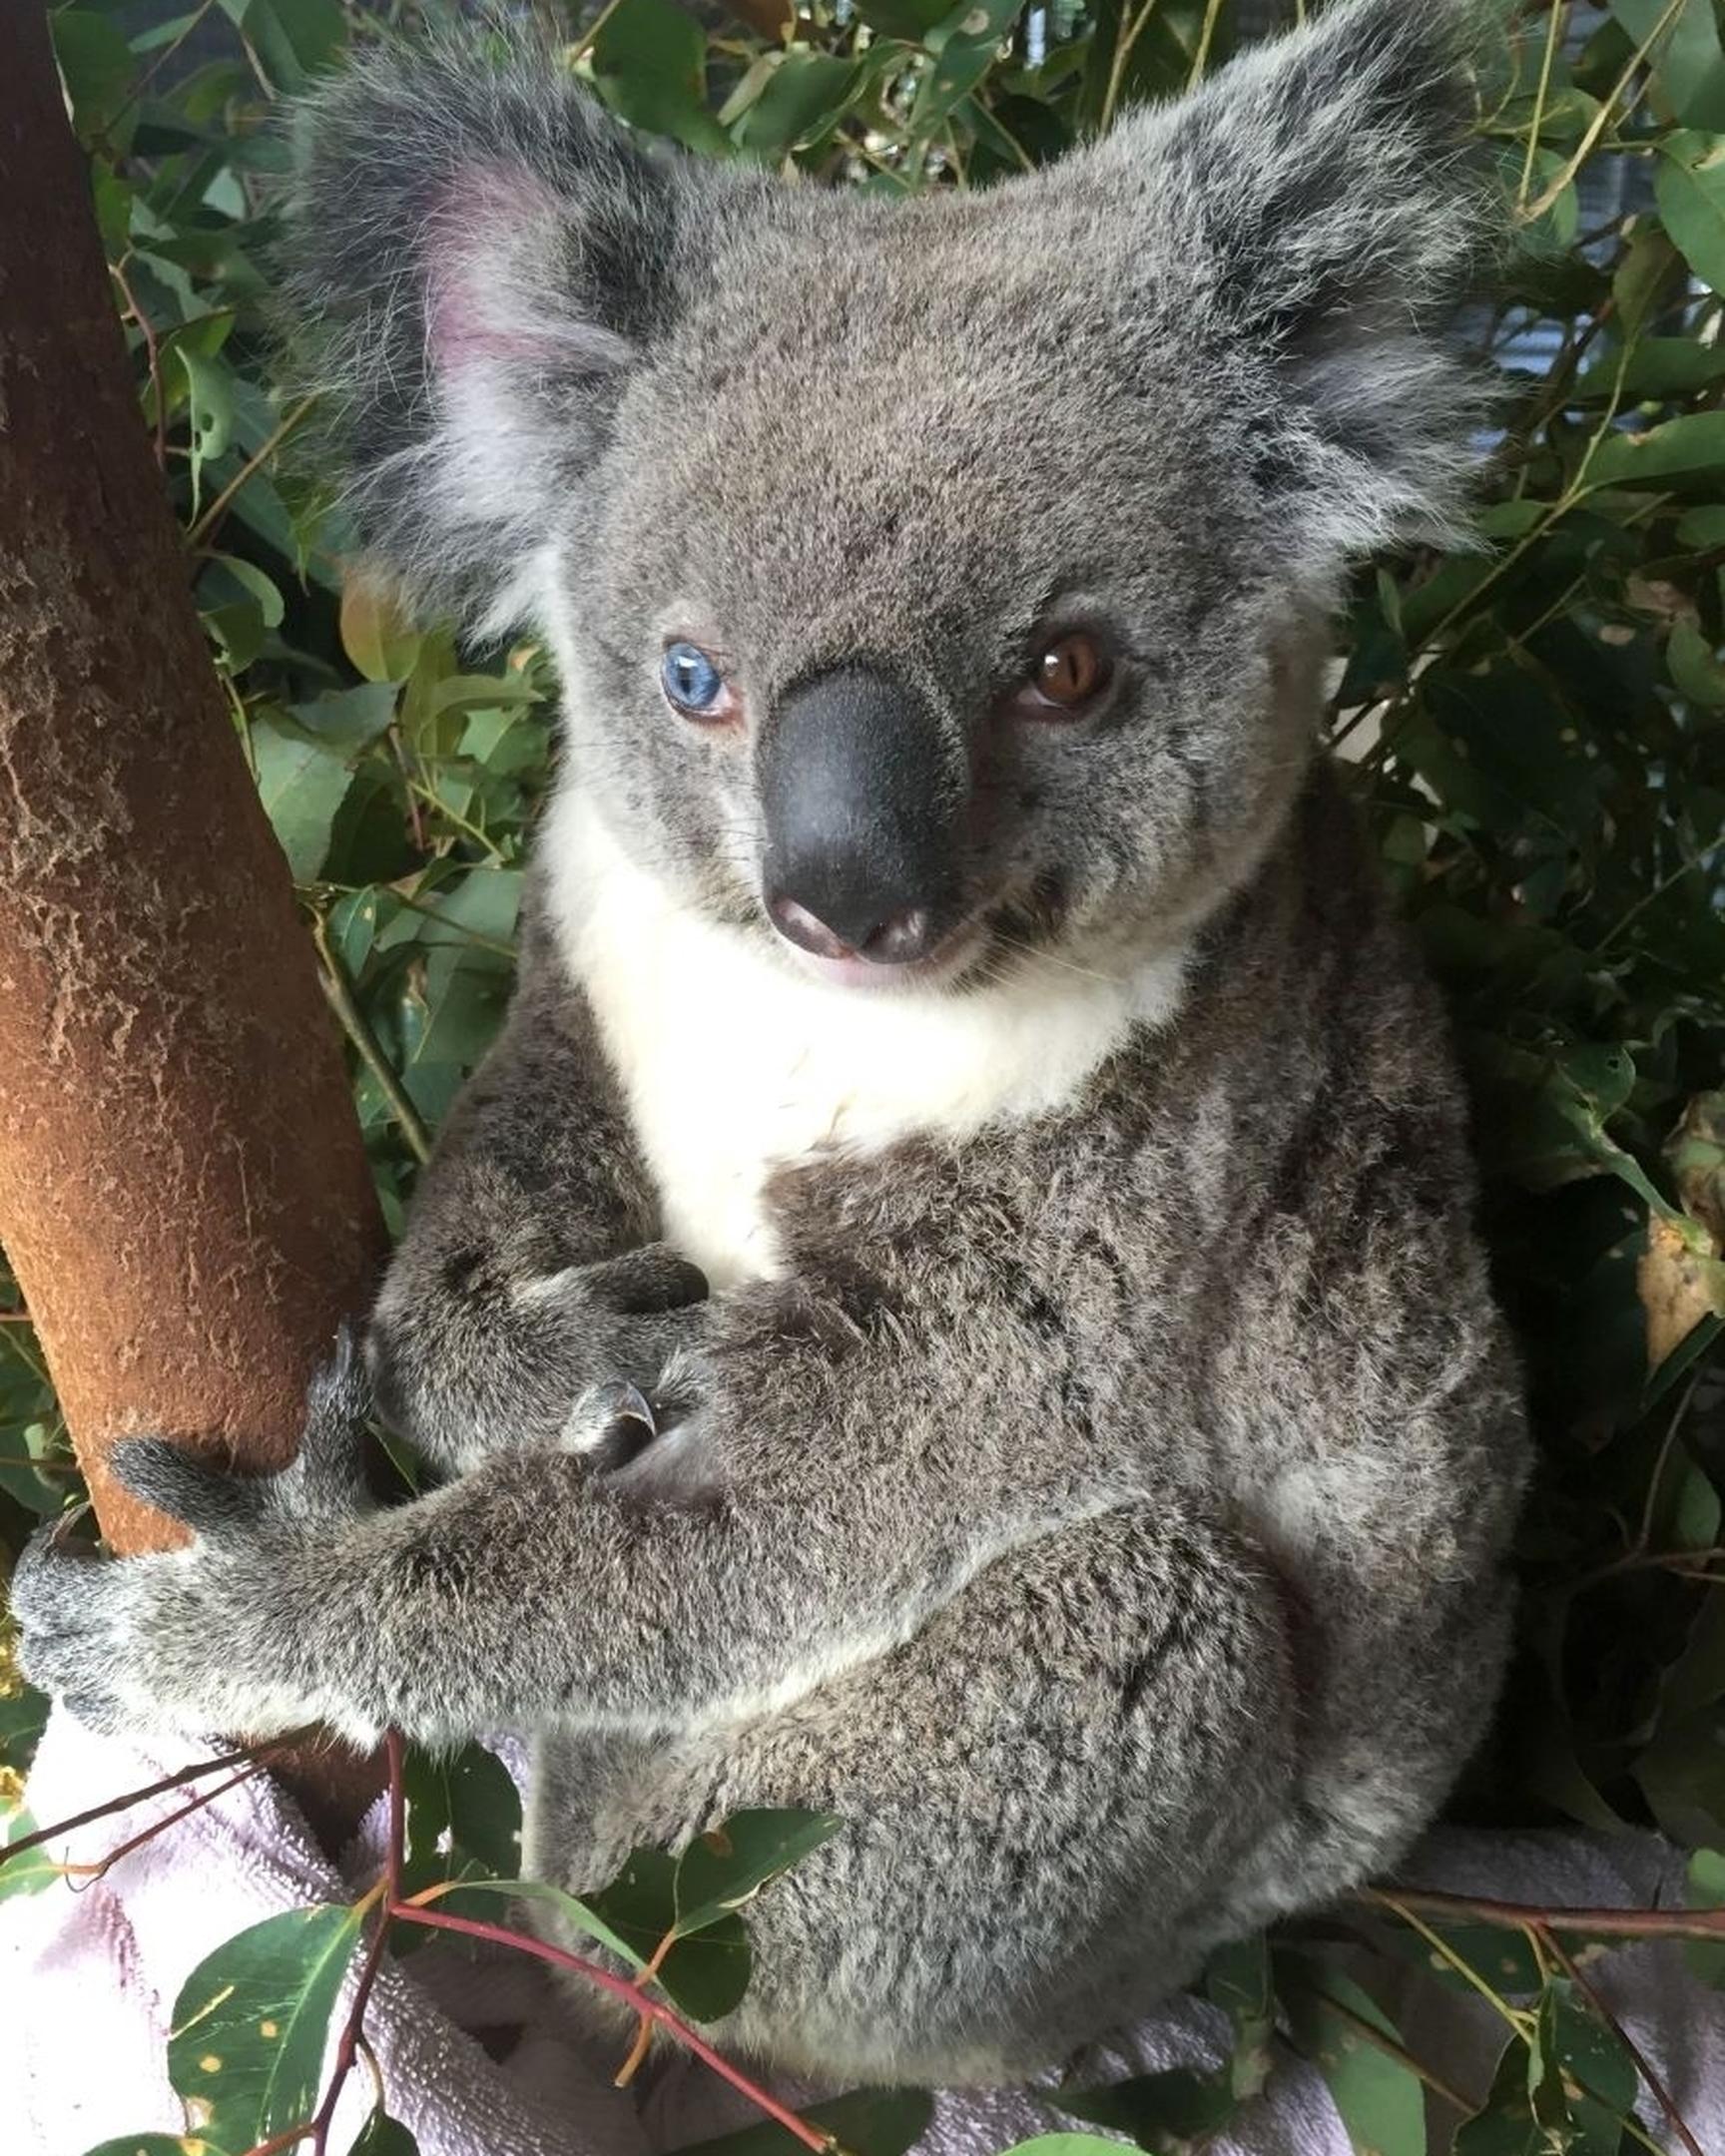 Cute koalas have become 'urban refugees